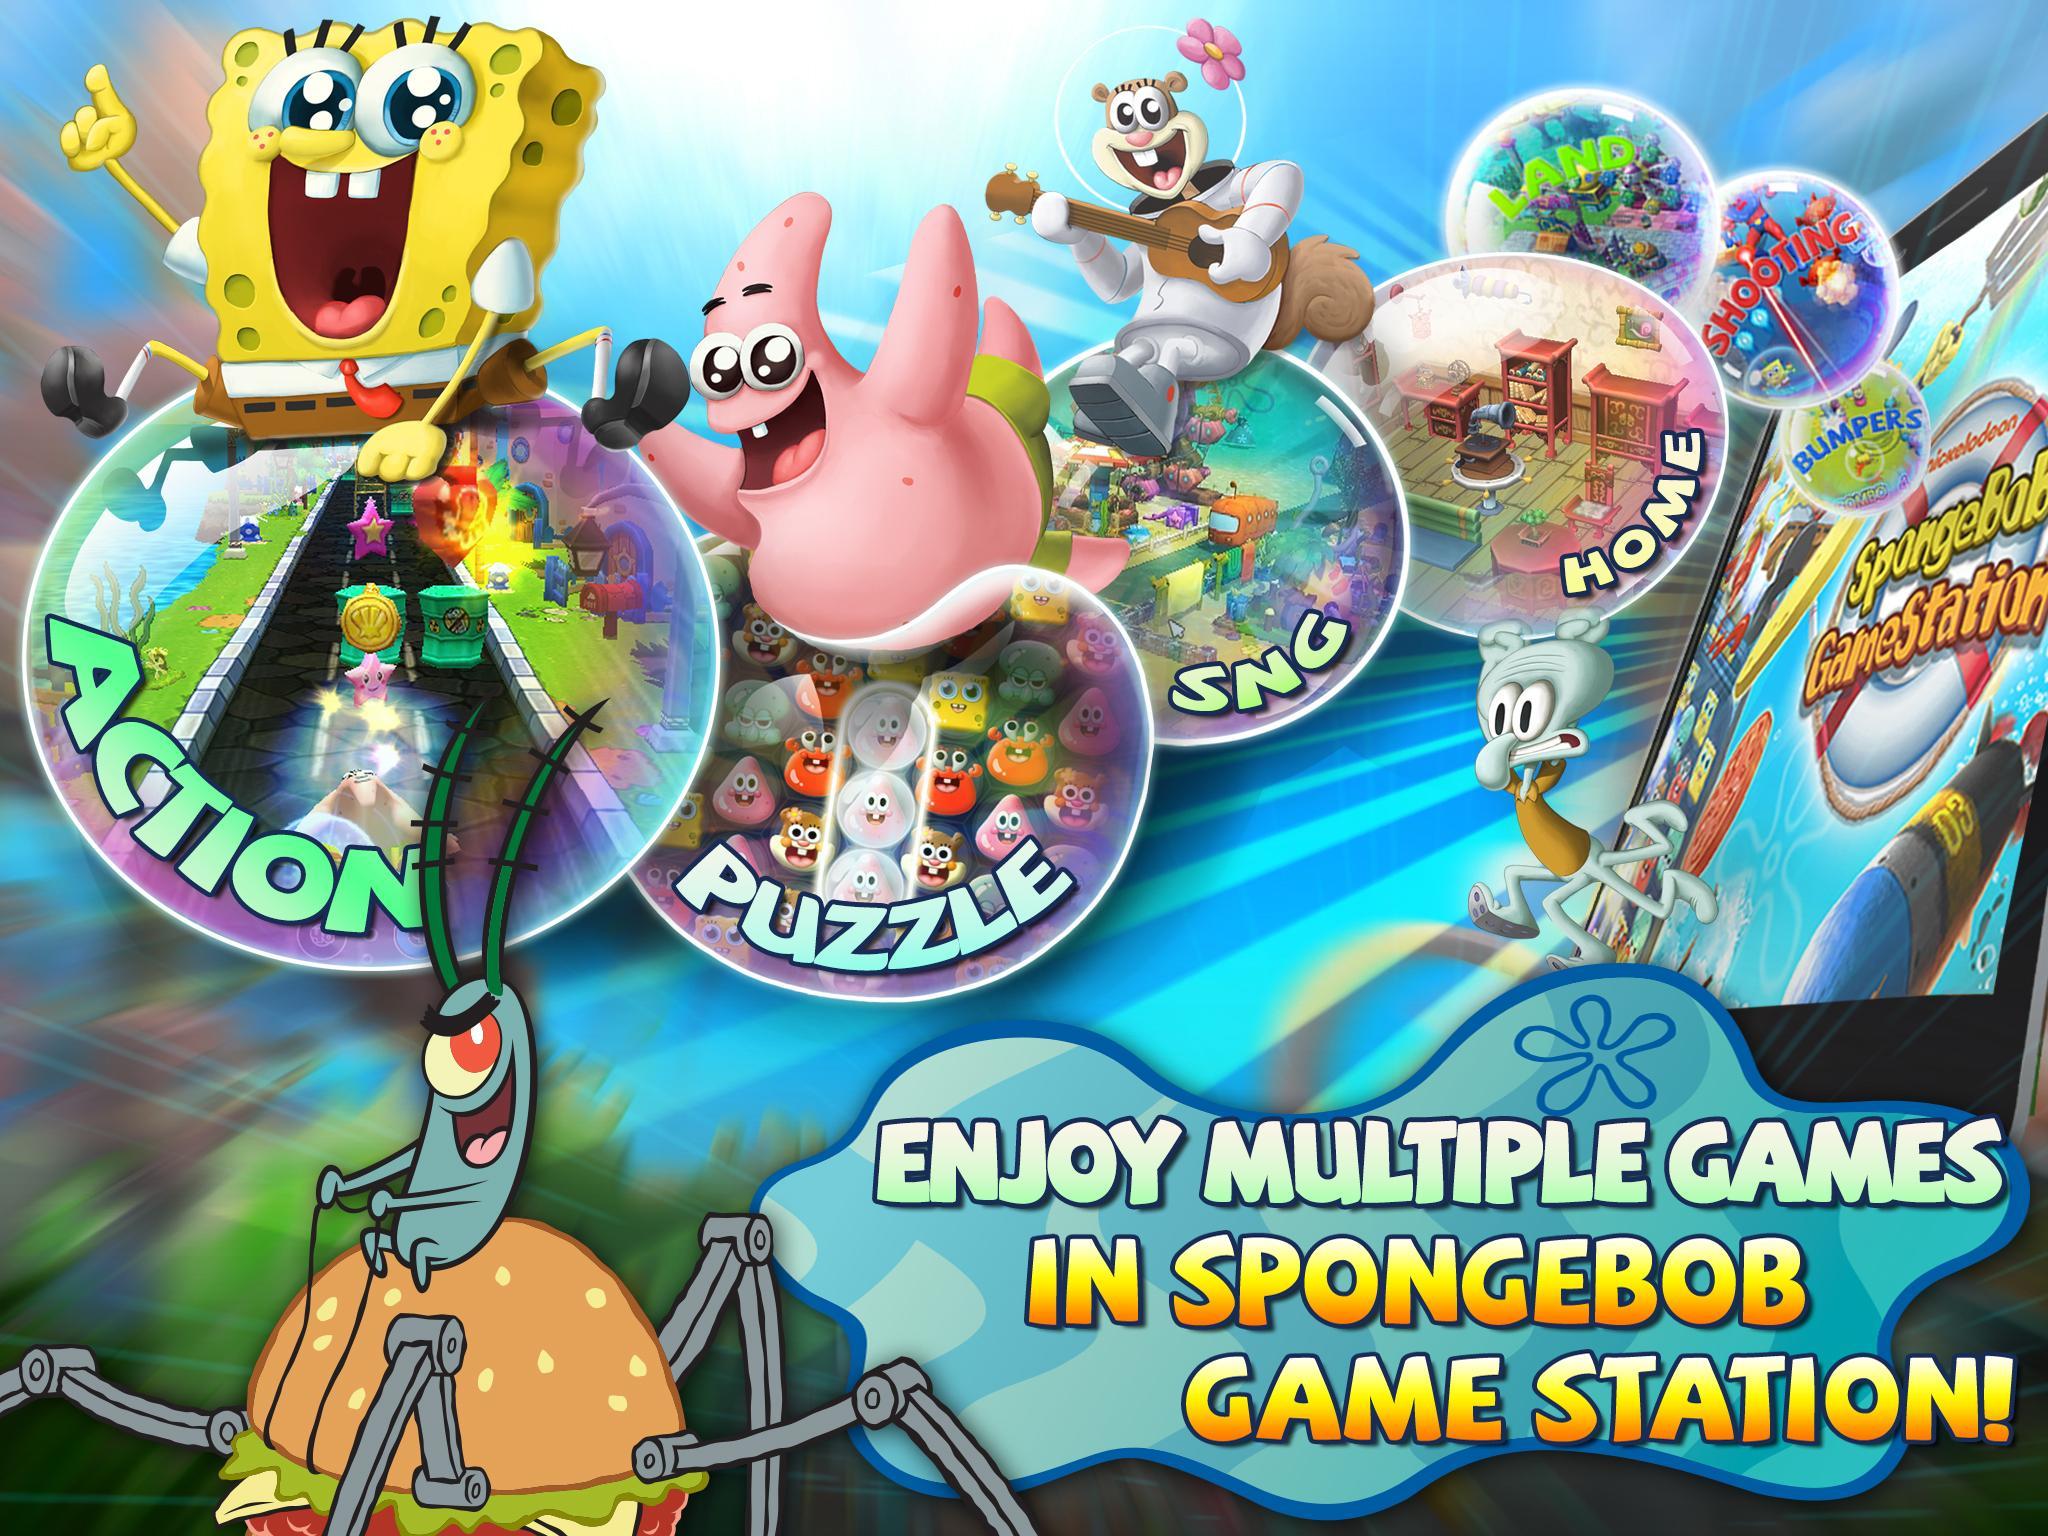 Spongebob Gamestation For Android Apk Download - sponge bob only feels pain simulator roblox